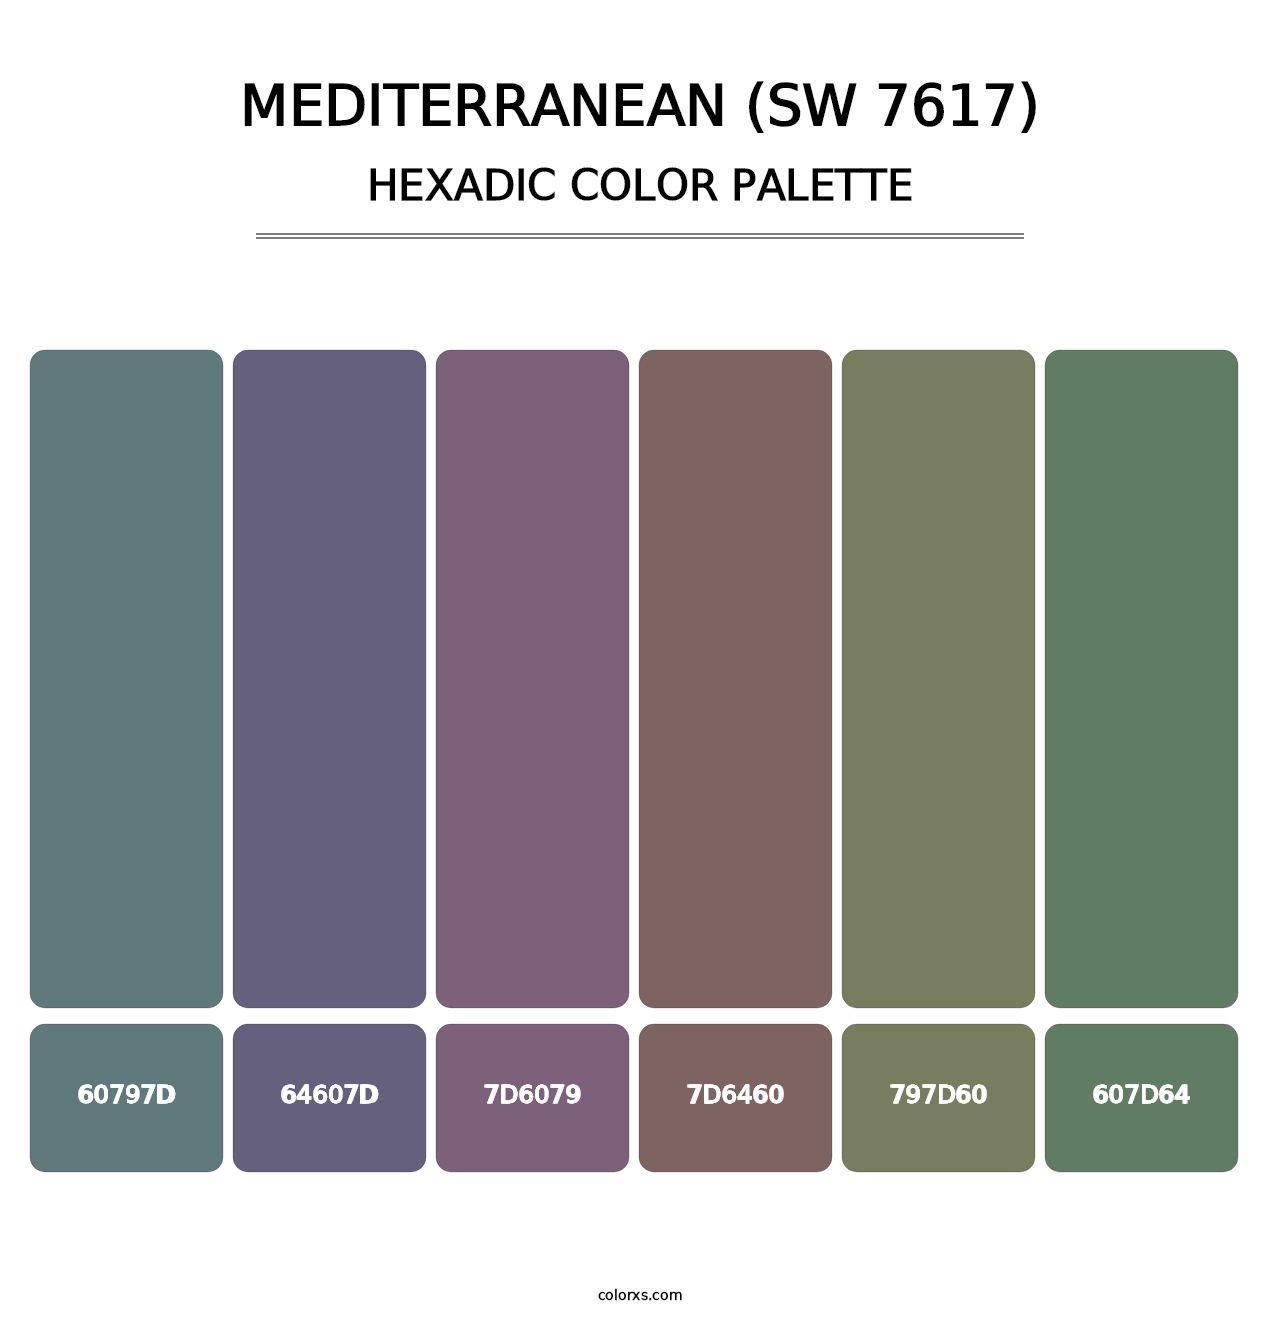 Mediterranean (SW 7617) - Hexadic Color Palette